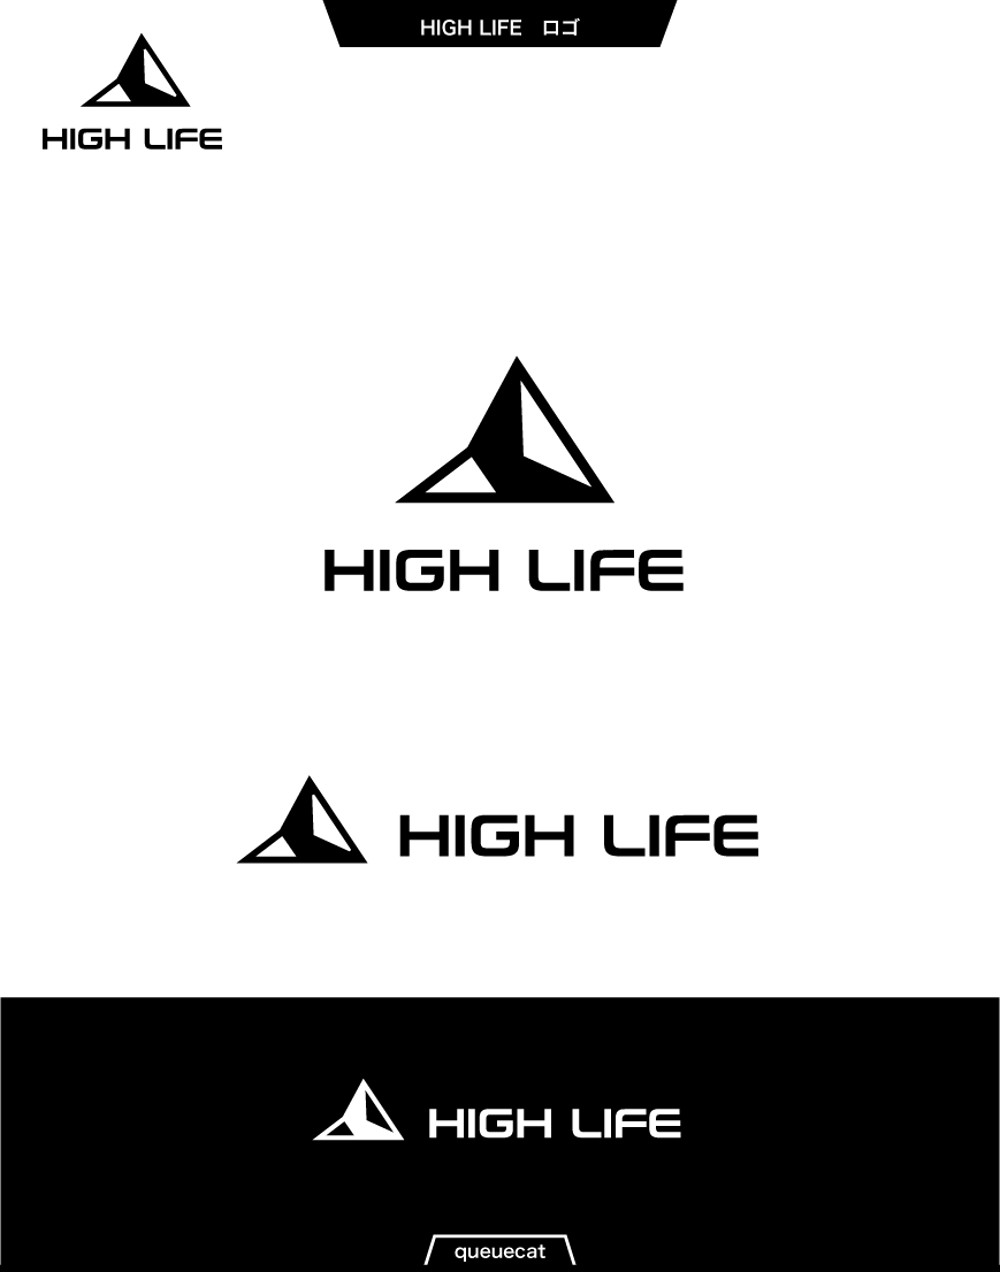 HIGH LIFE2_1.jpg